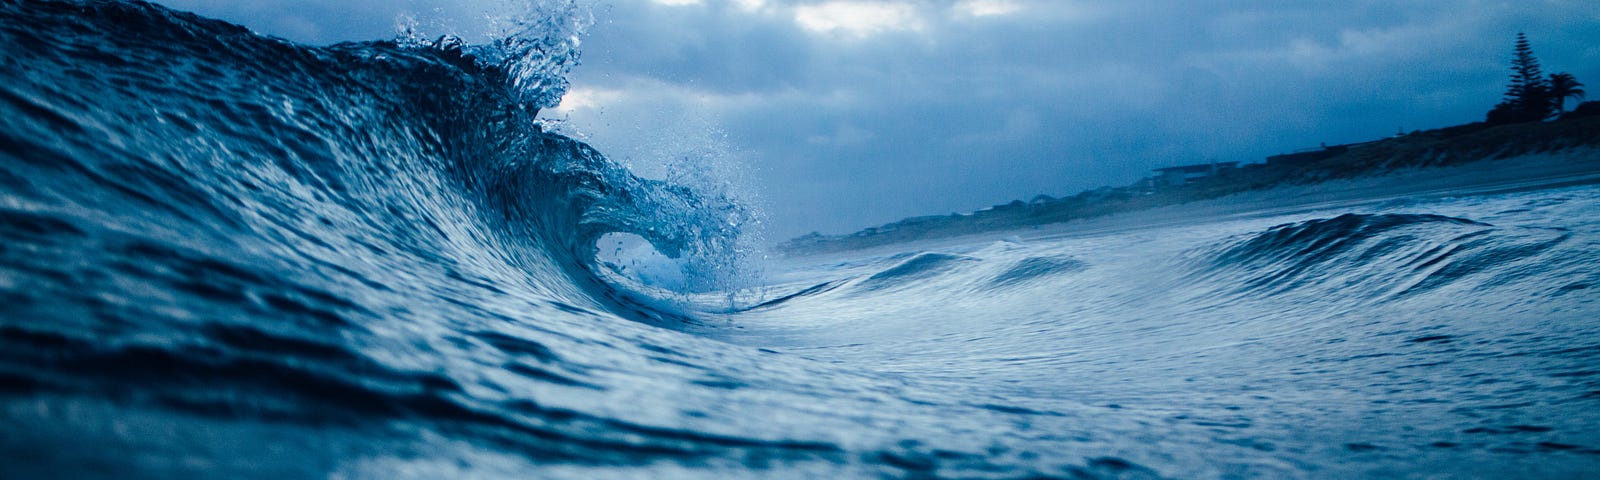 A large ocean wave breaks as it’s heading to shore.